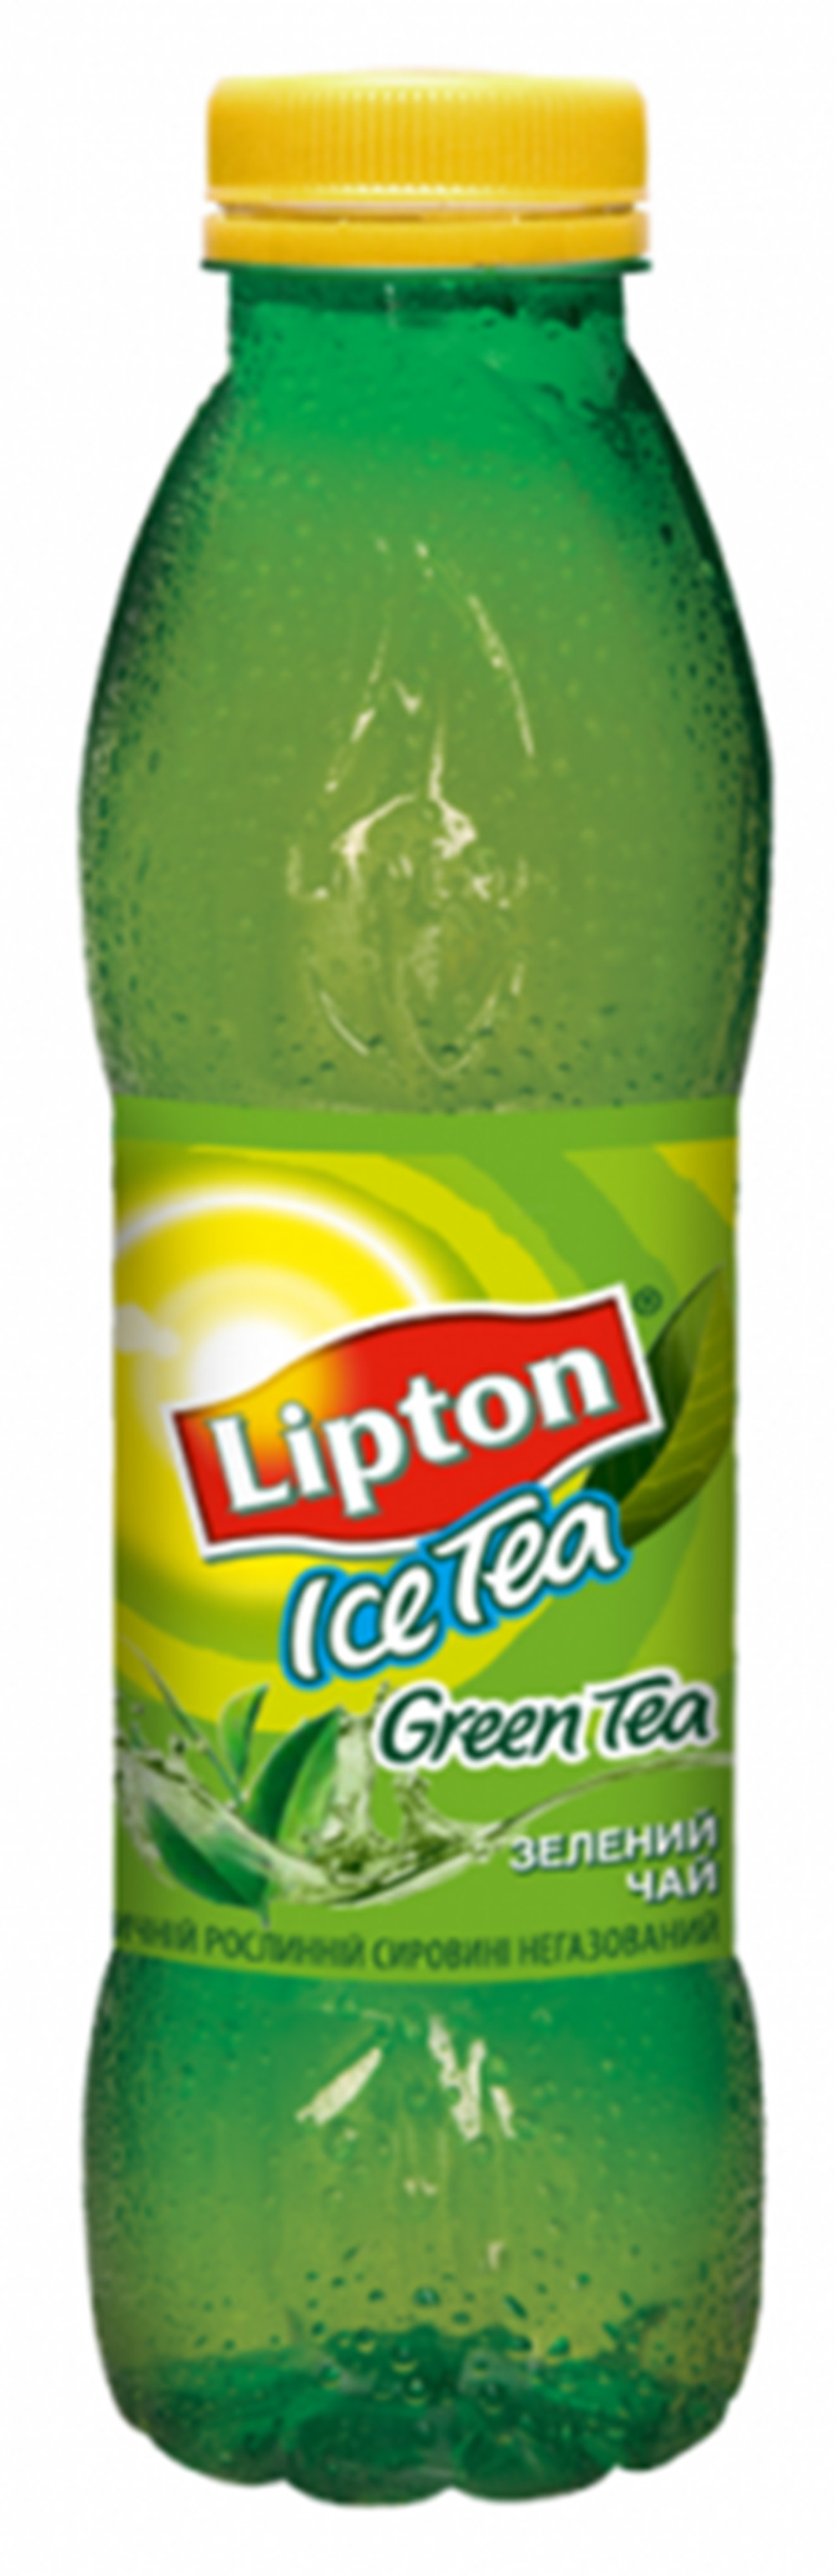 Напиток Липтон зеленый бут 0.5 л - интернет-магазин Близнецы